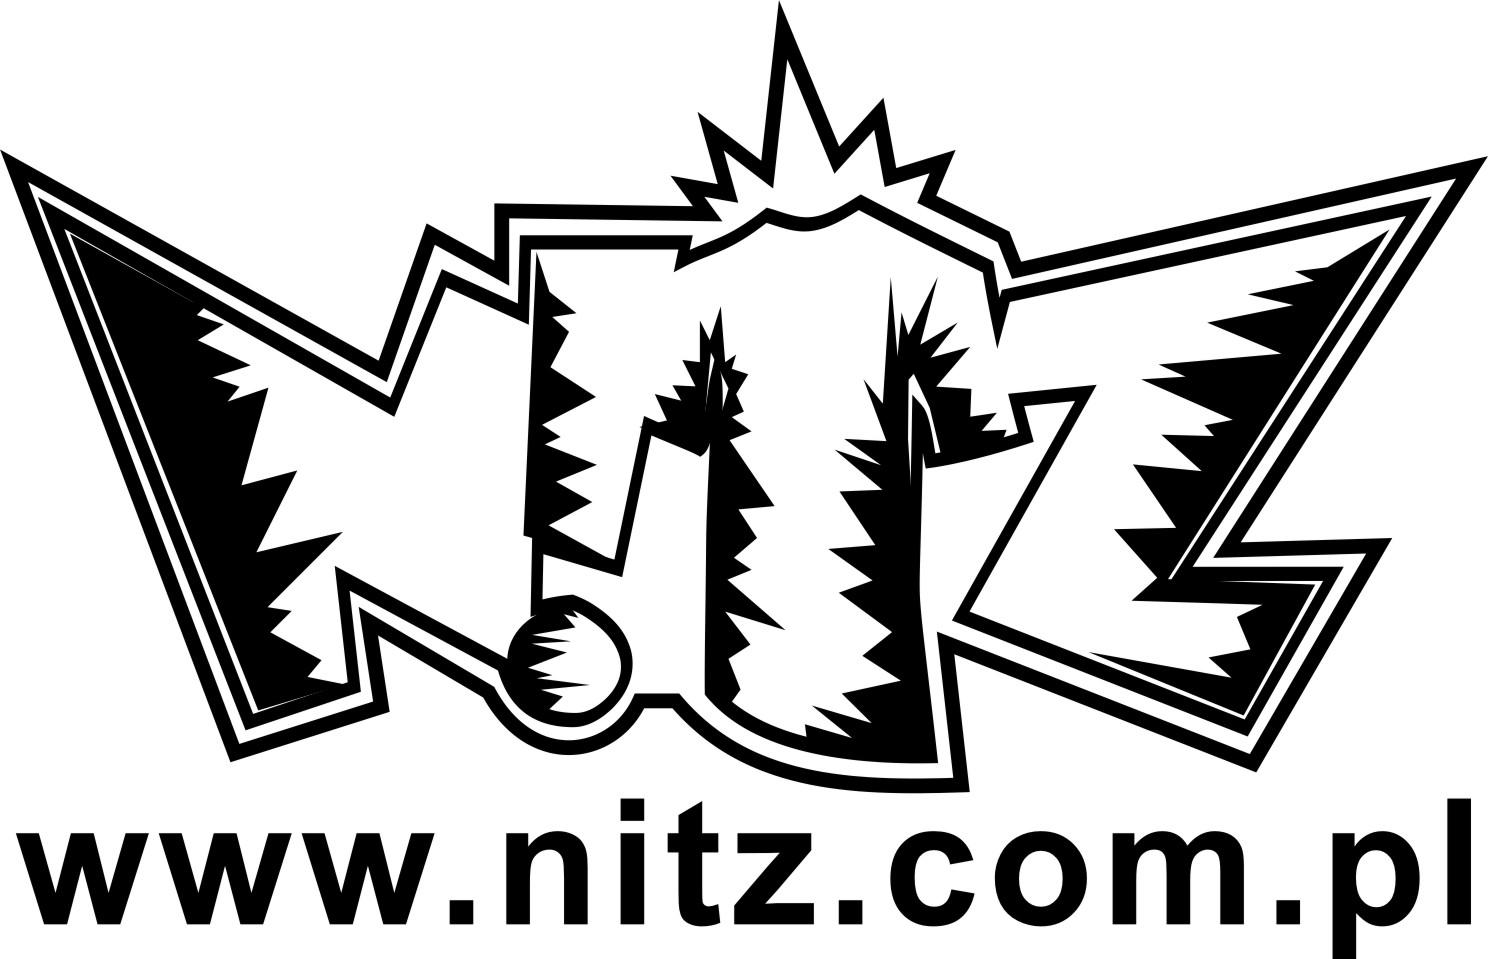 NITZ - Najelpsze nadruki!